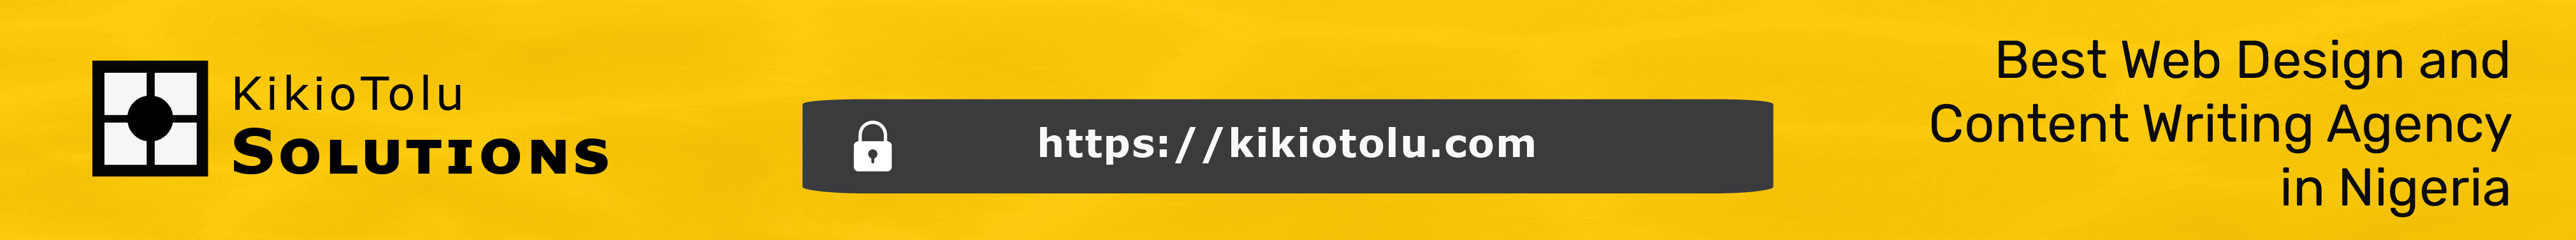 kikiotolu solutions web design and content writing